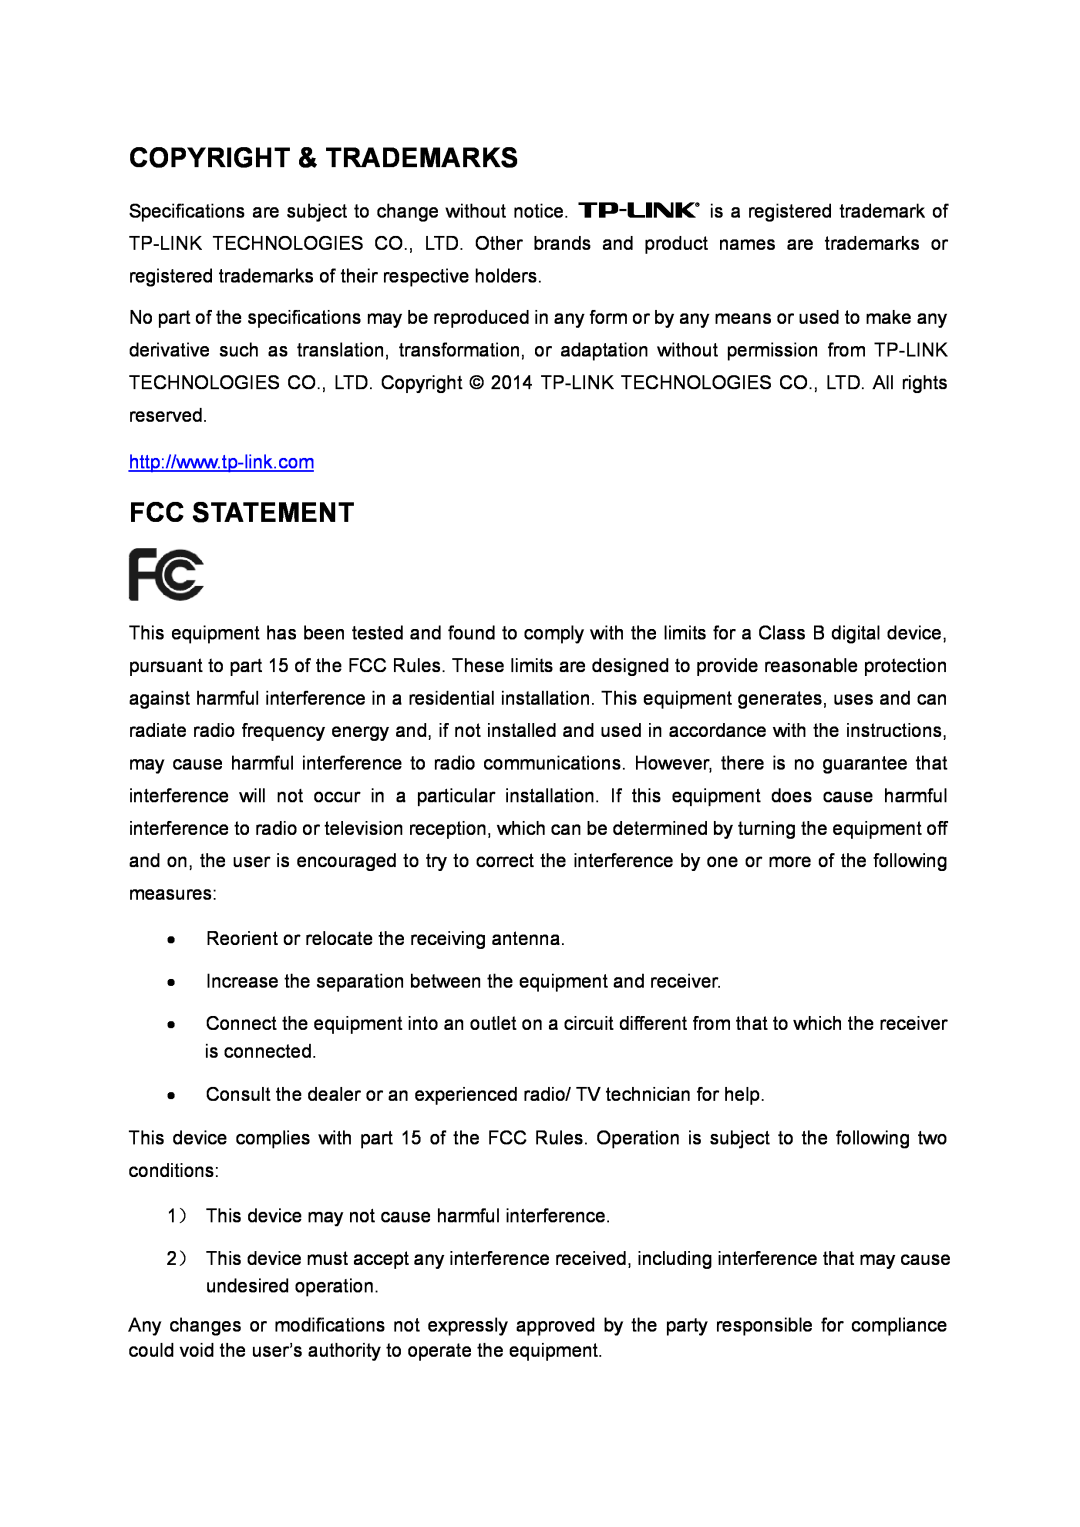 TP-Link AC1200 manual Copyright & Trademarks, Fcc Statement 